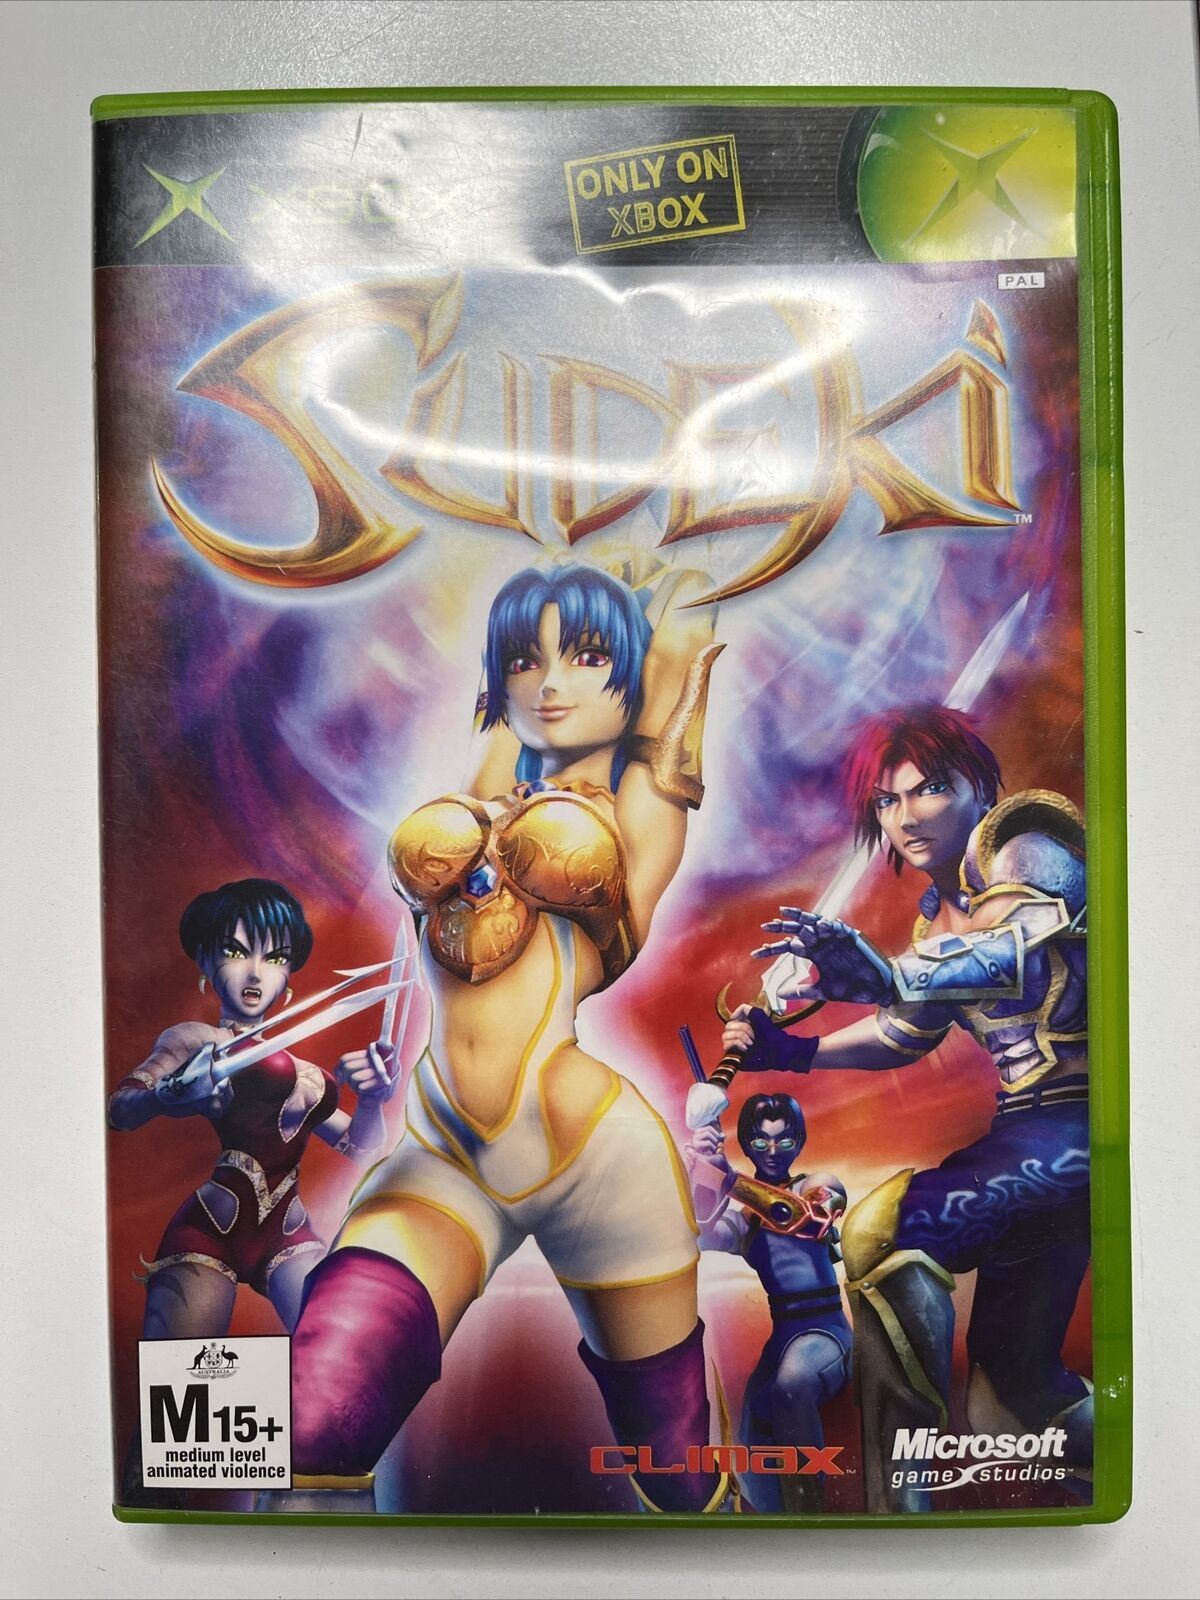 Sudeki - Microsoft Xbox Original PAL Game with Manual